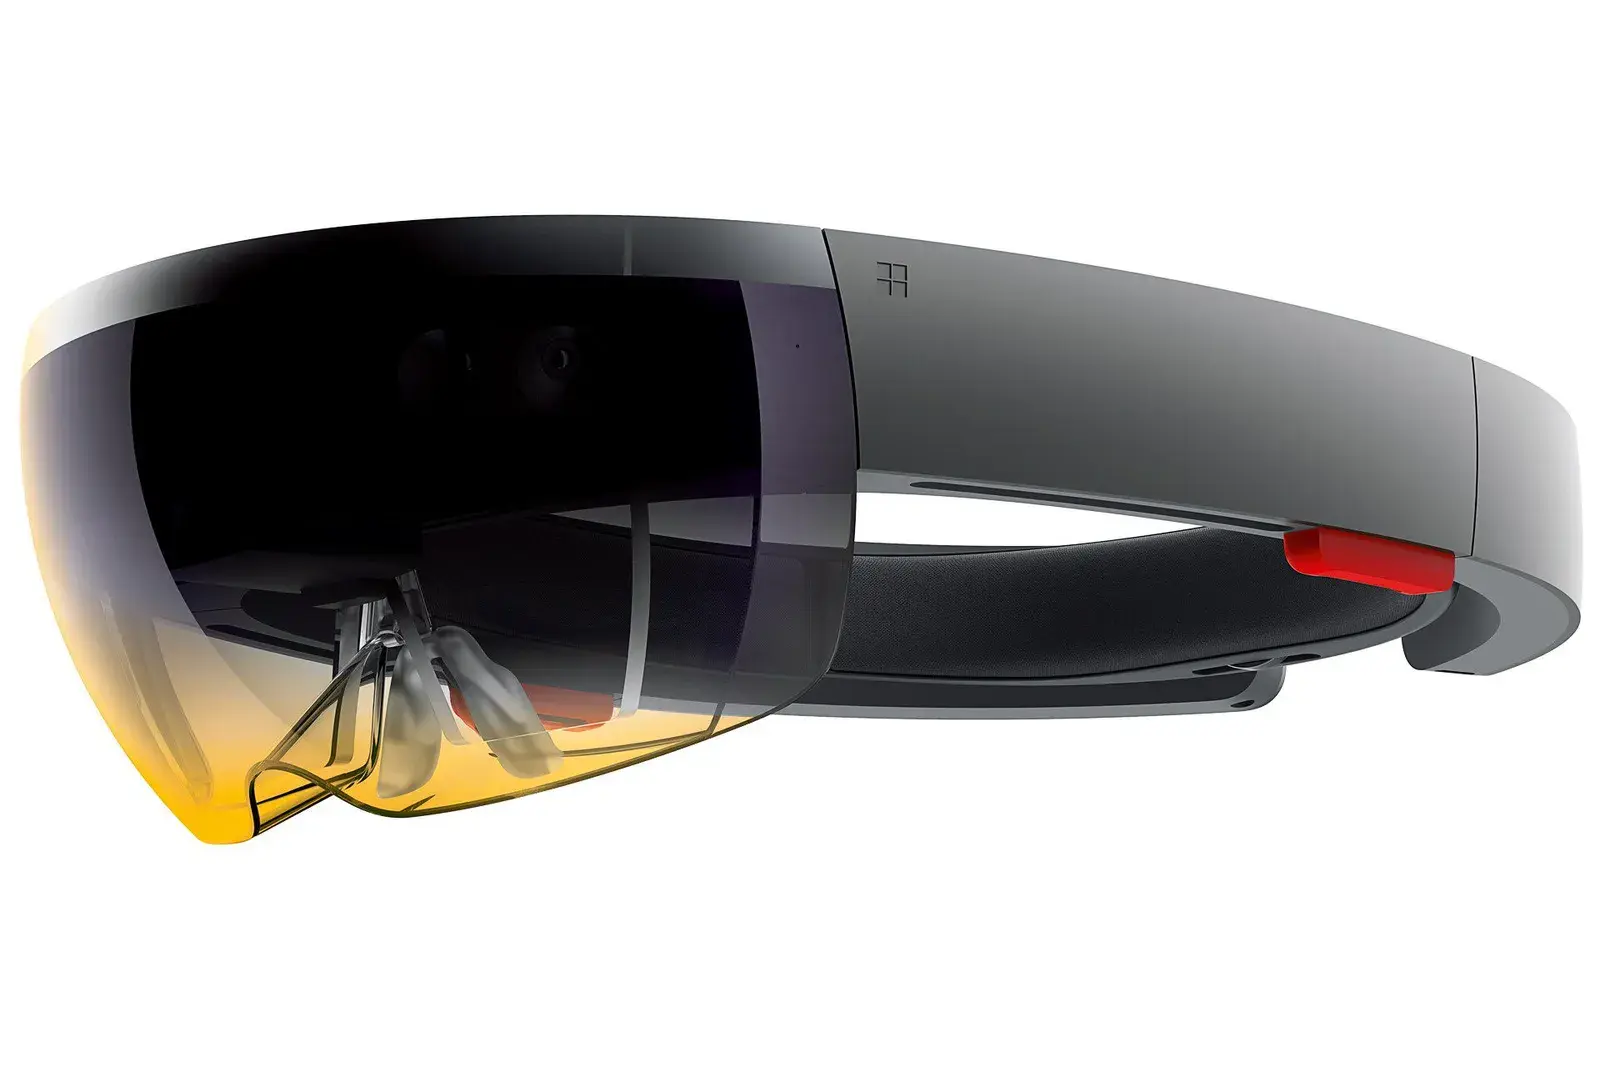 The Microsoft HoloLens